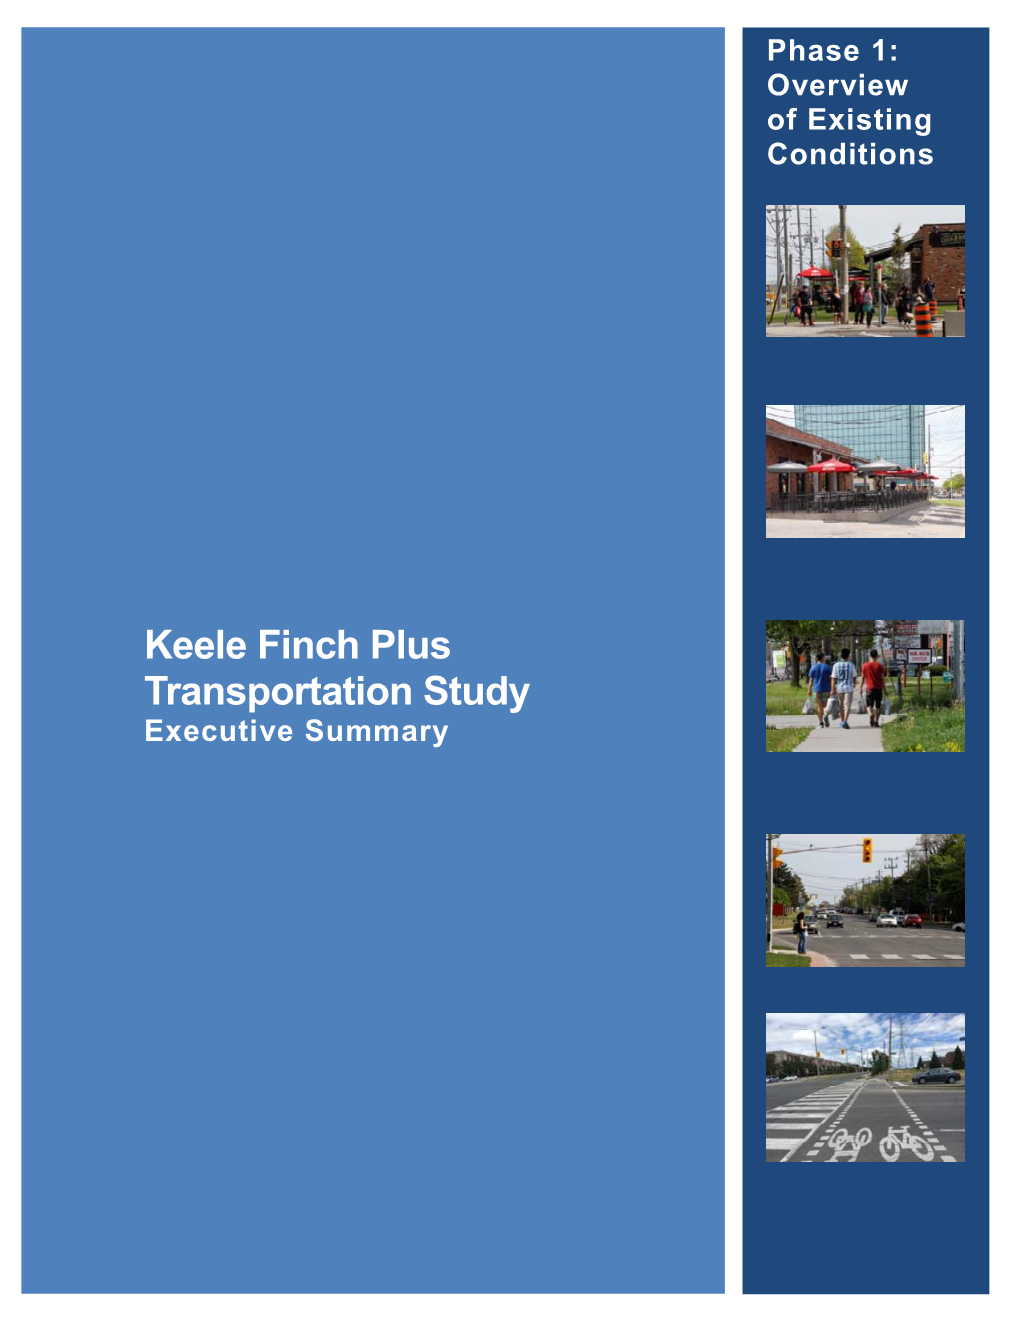 Keele Finch Plus Transportation Study. Executive